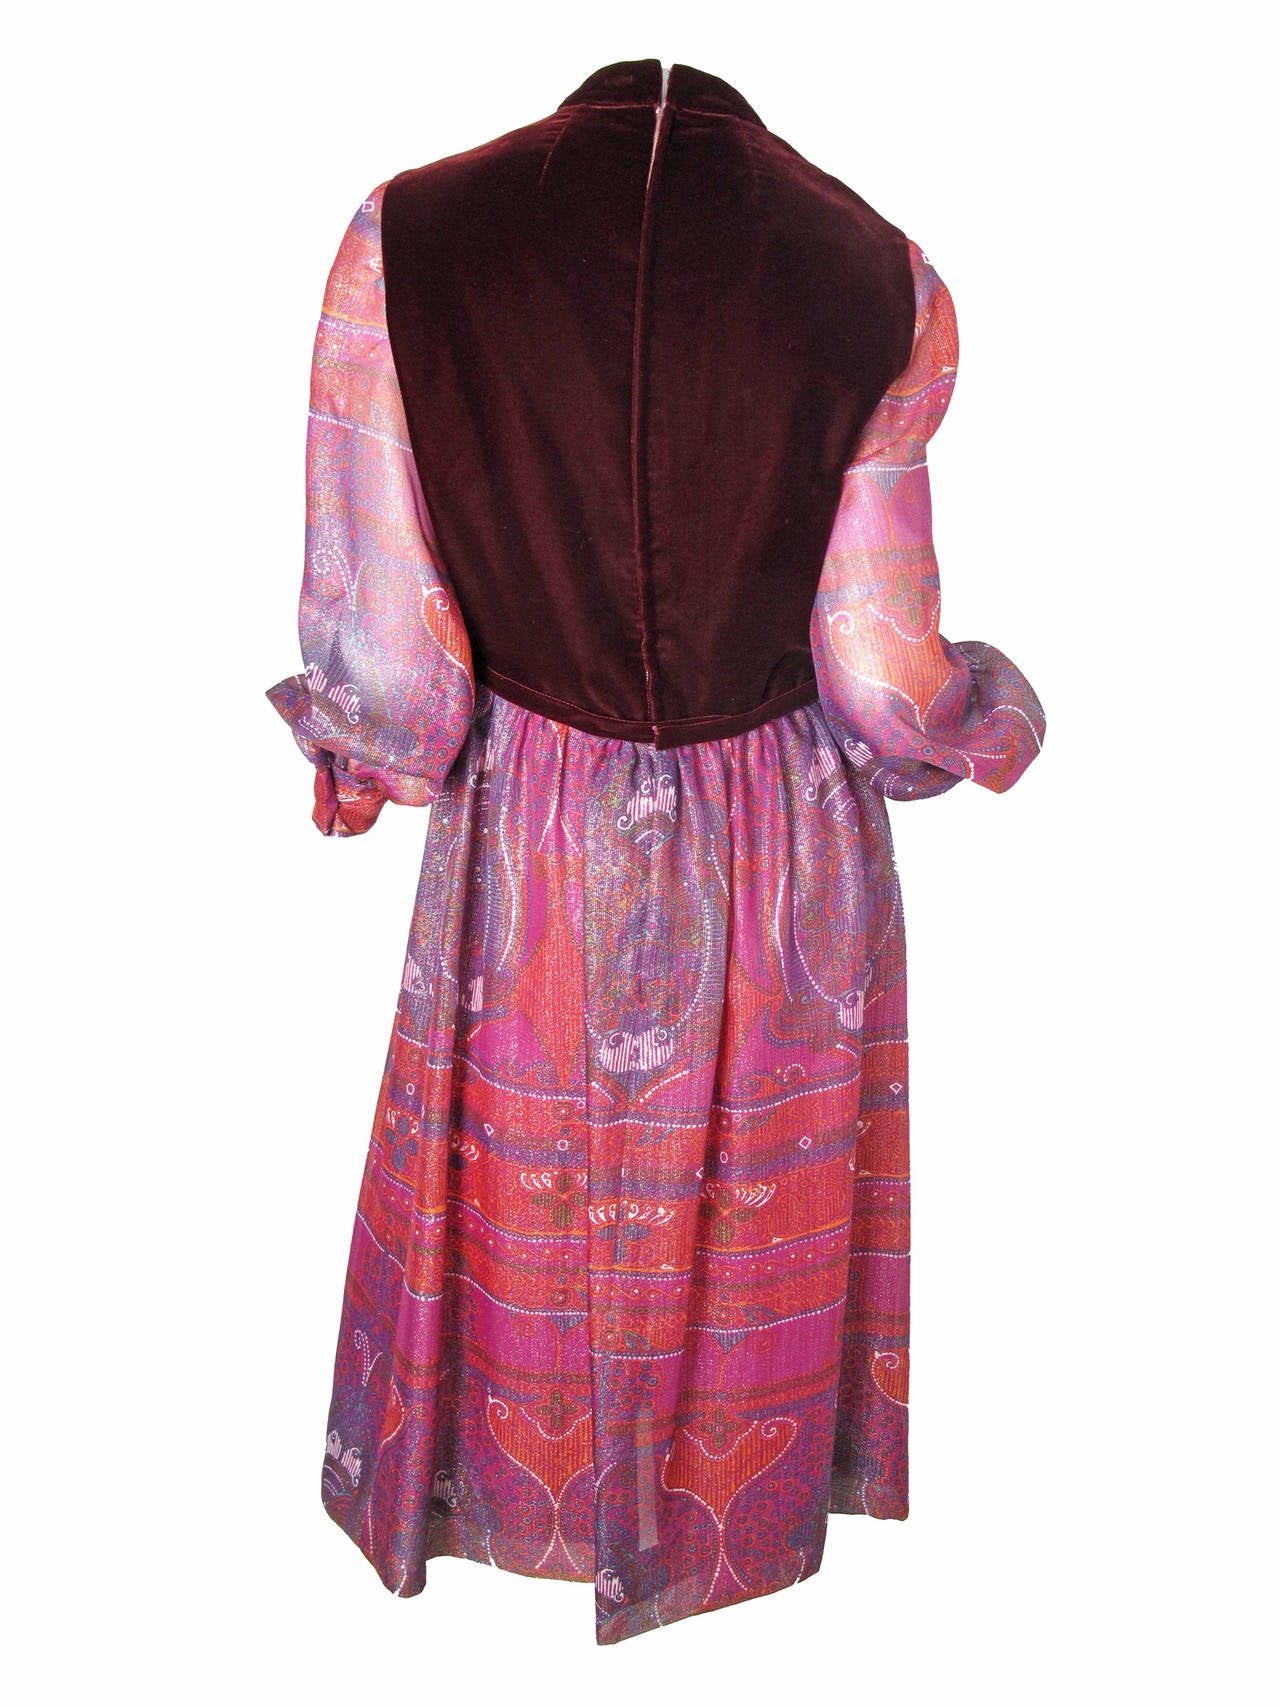 Women's 1970s Adele Simpson Dress